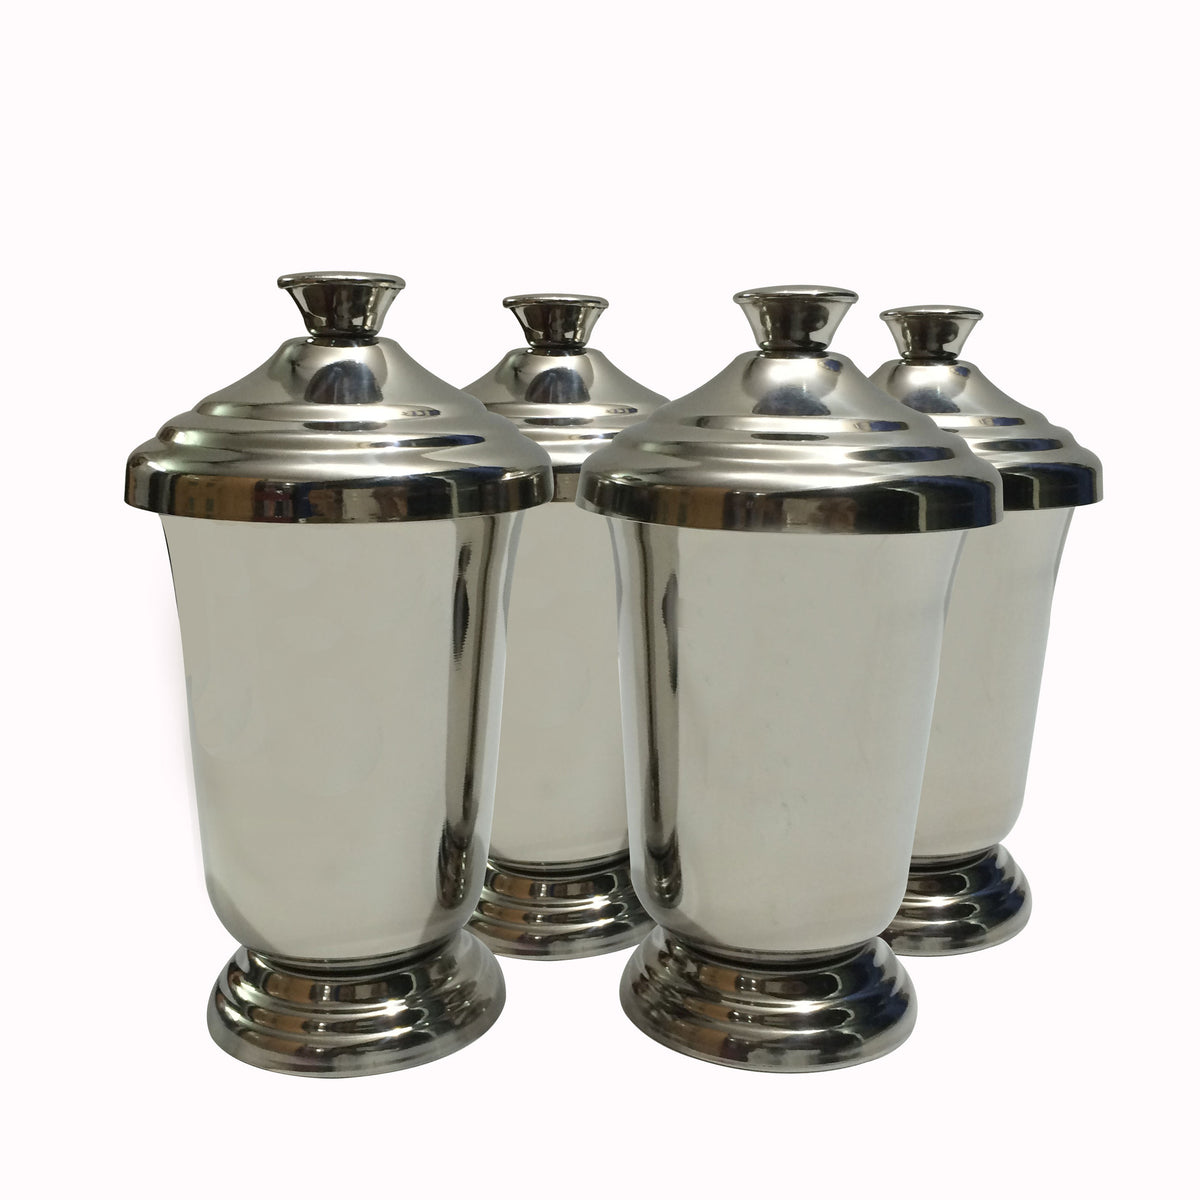 Maharaja Stainless Steel Glass Set of 4 - Hot Muggs - 1